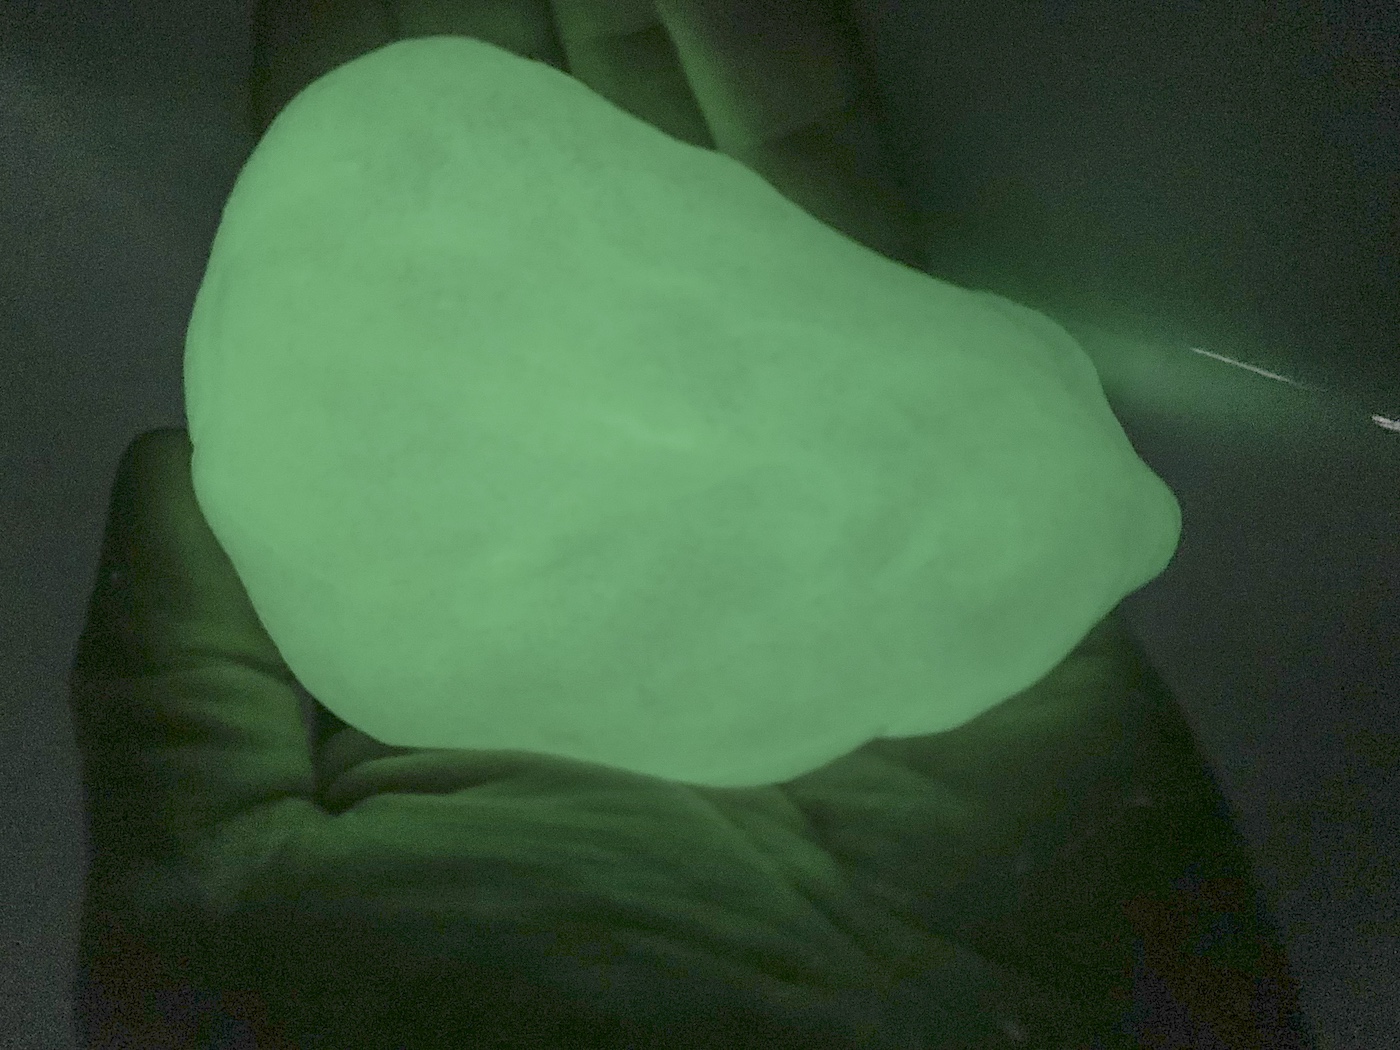 Recharging the glow slime